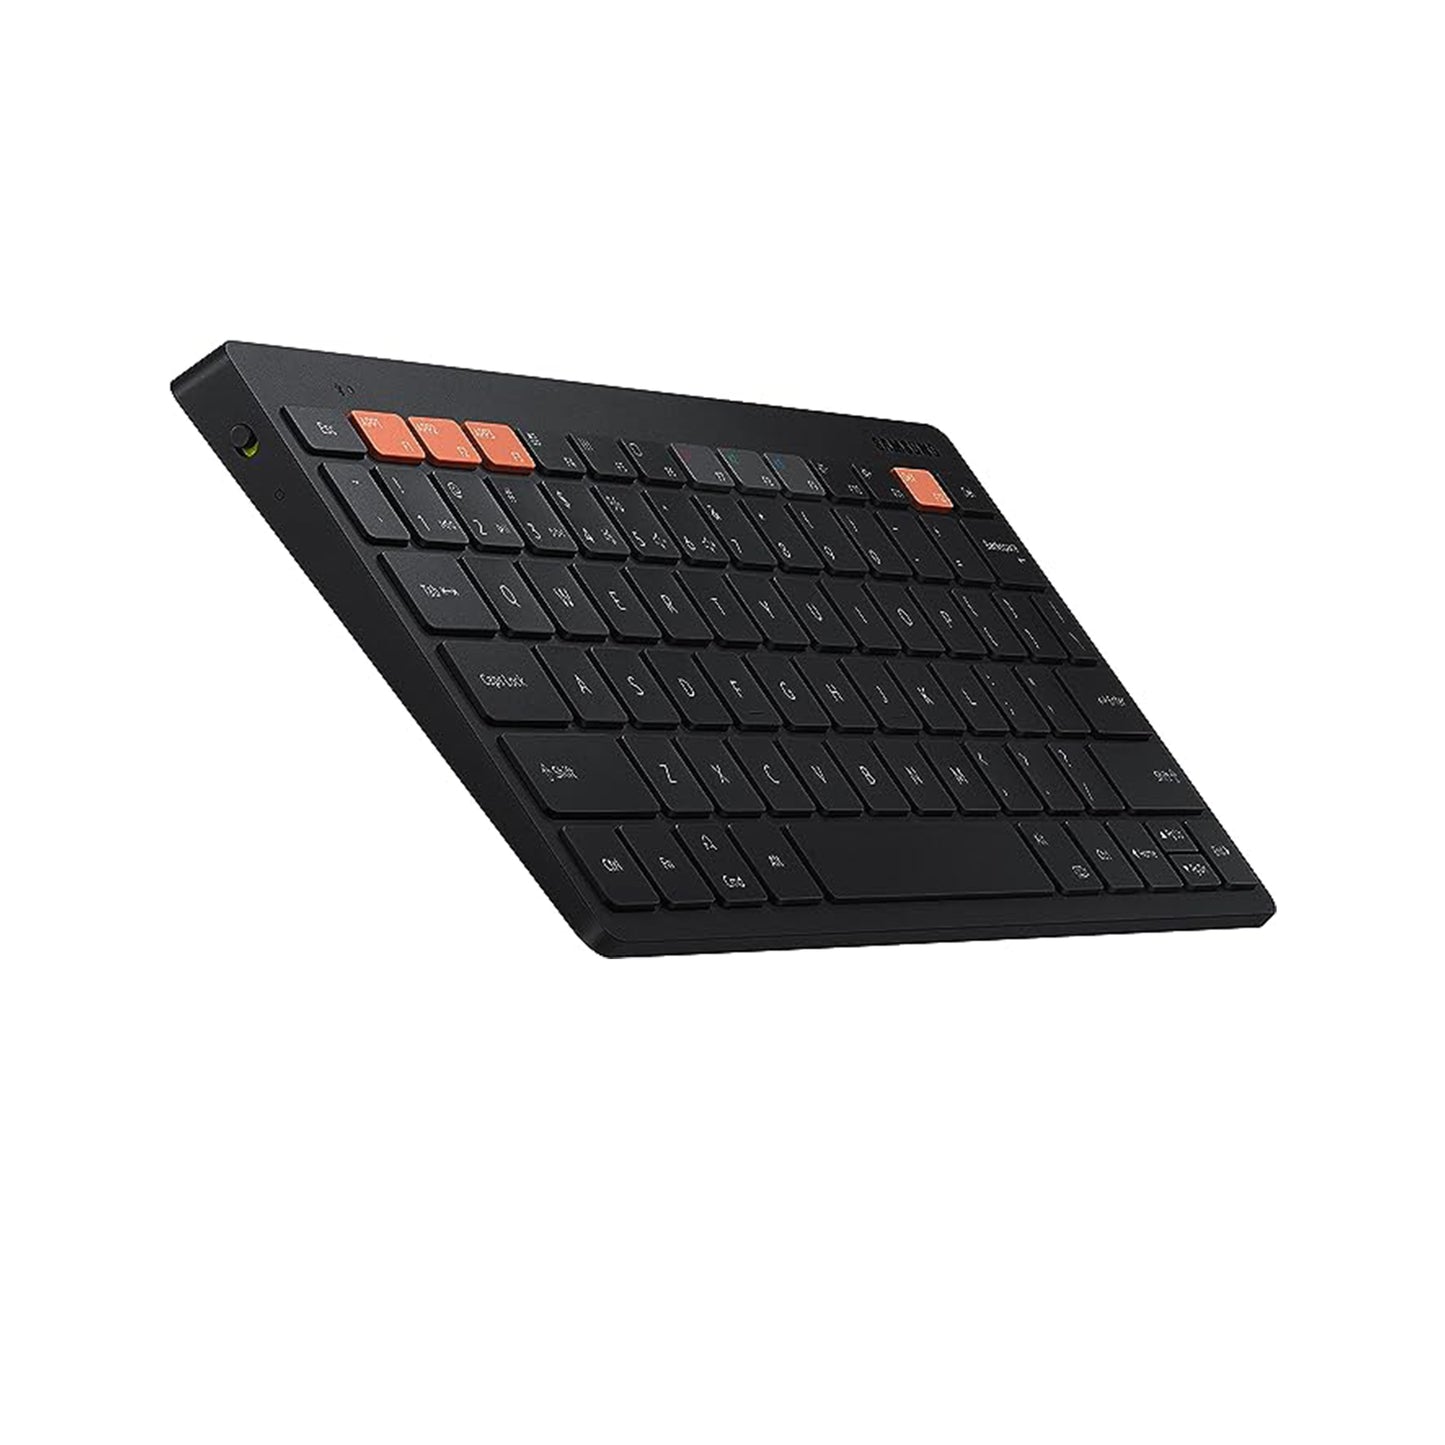 SAMSUNG Official Smart Keyboard Trio 500 (EJ-B3400UBEGUS), Black - US Model